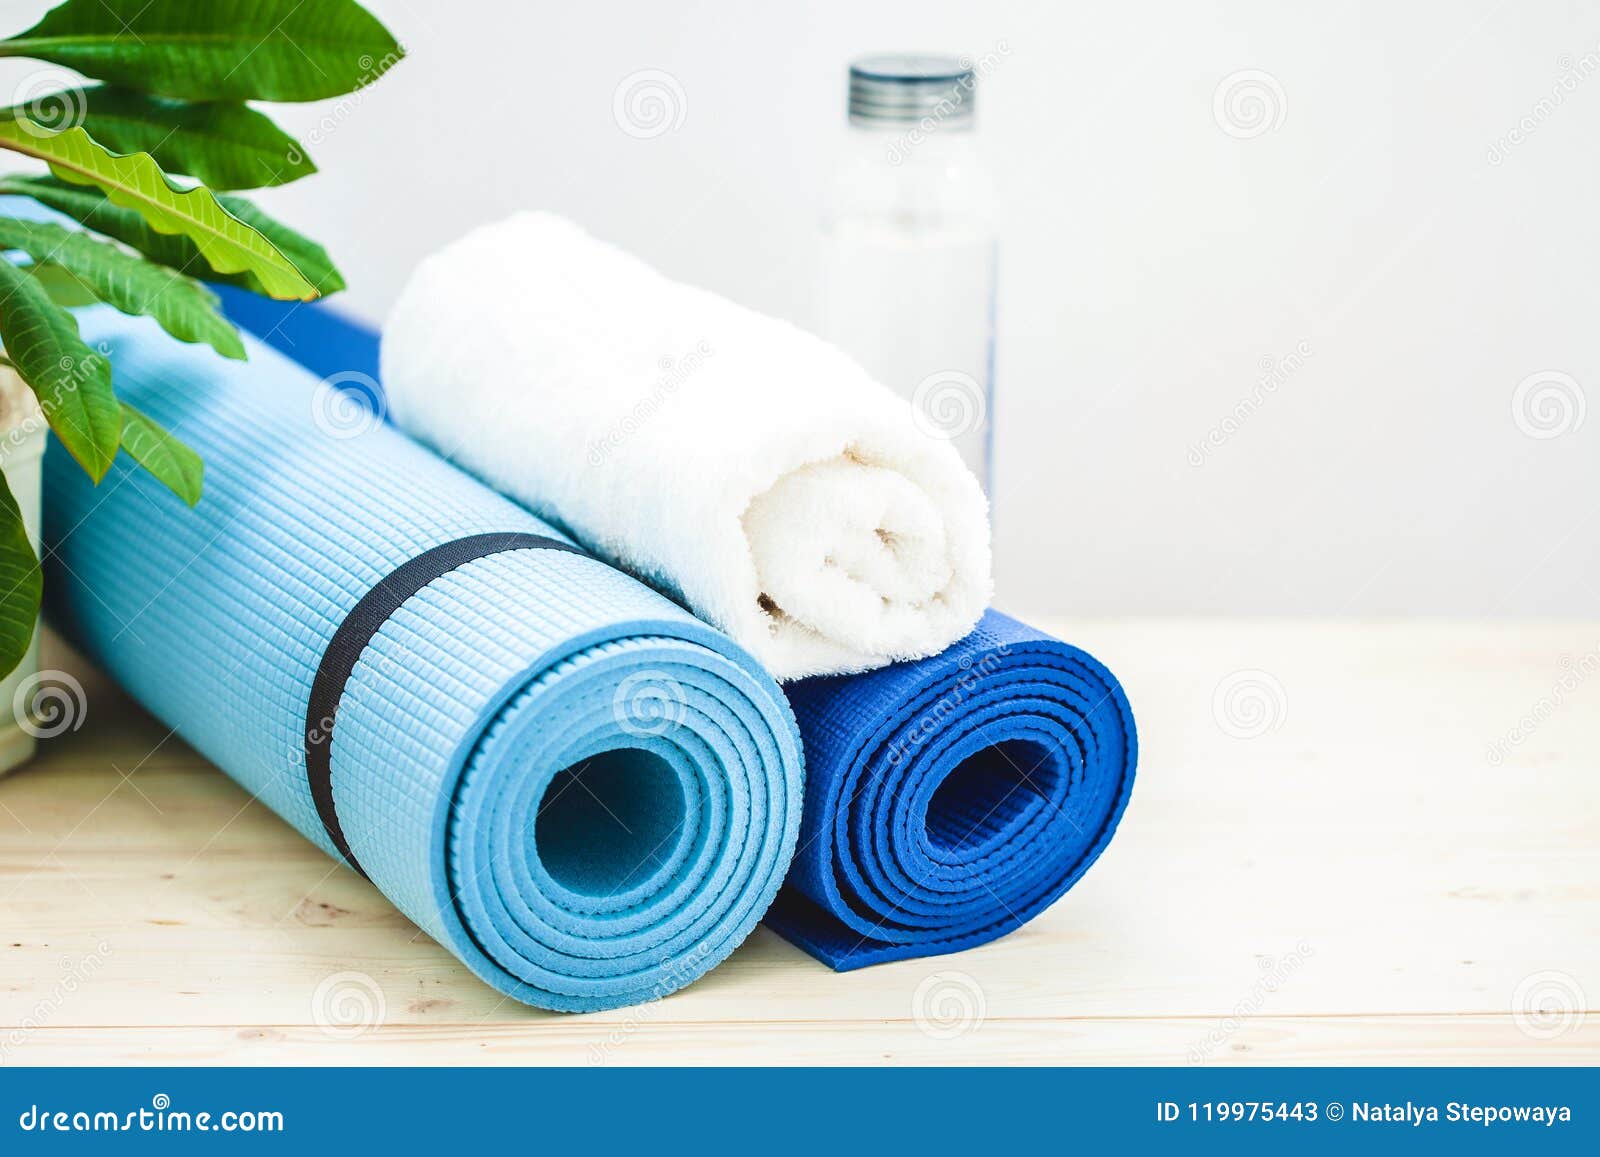 https://thumbs.dreamstime.com/z/set-sports-yoga-mat-towel-bottle-water-light-background-concept-healthy-lifestyle-copy-space-set-119975443.jpg